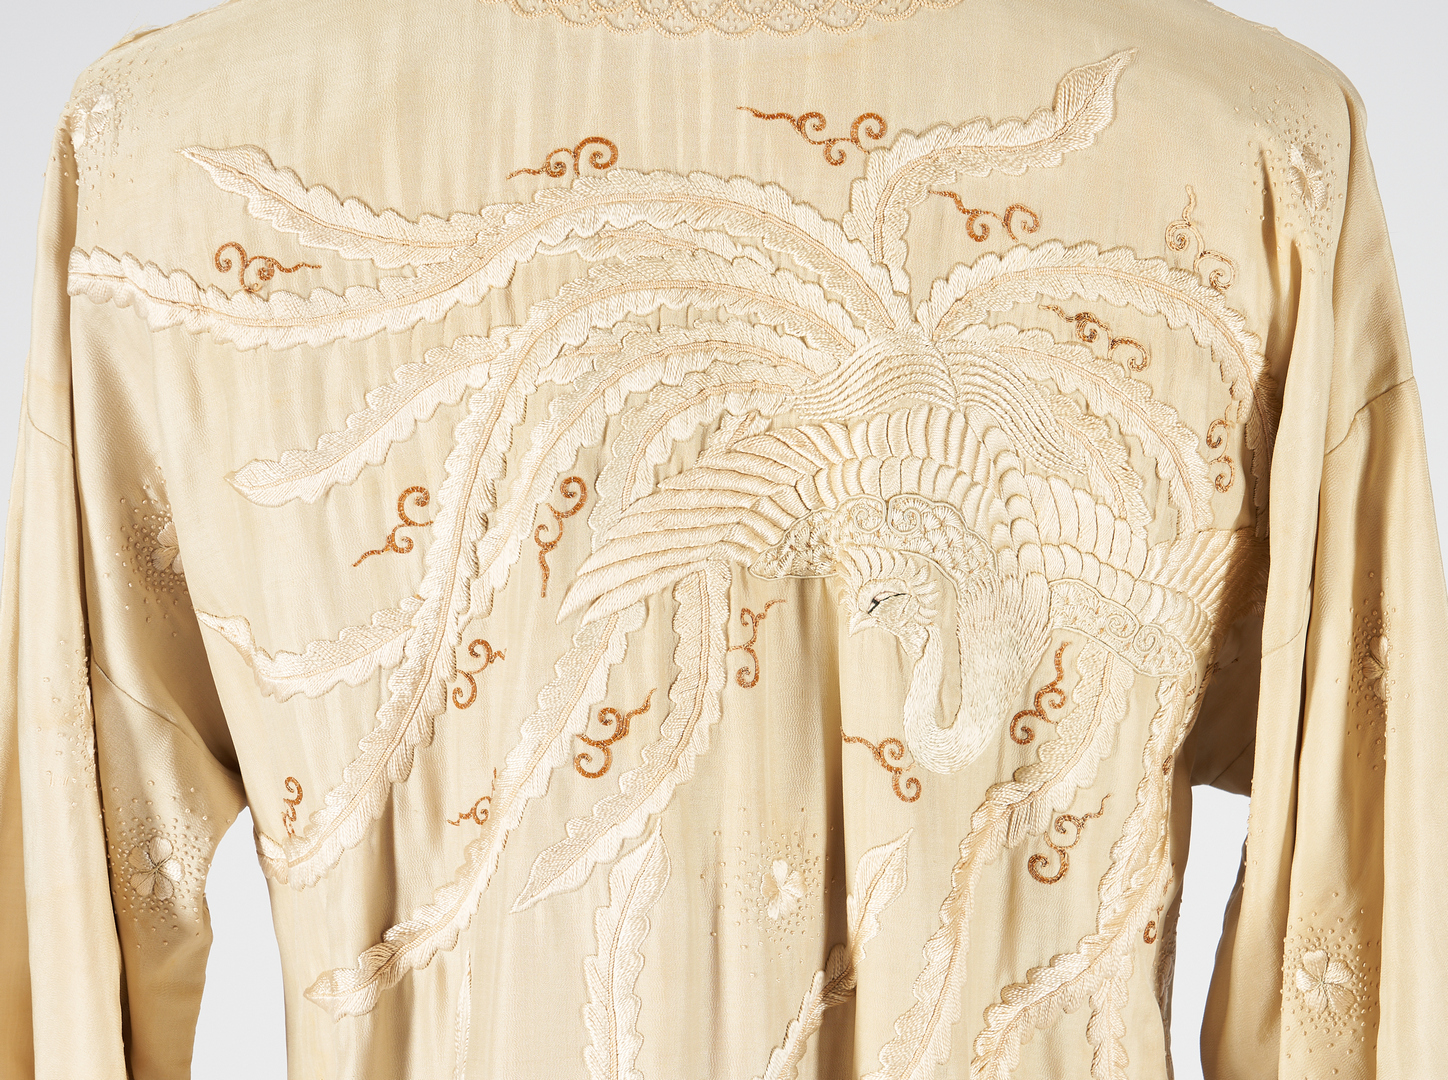 Lot 1181: 2 Antique Asian Silk Robes incl. Bridal Shiromuku